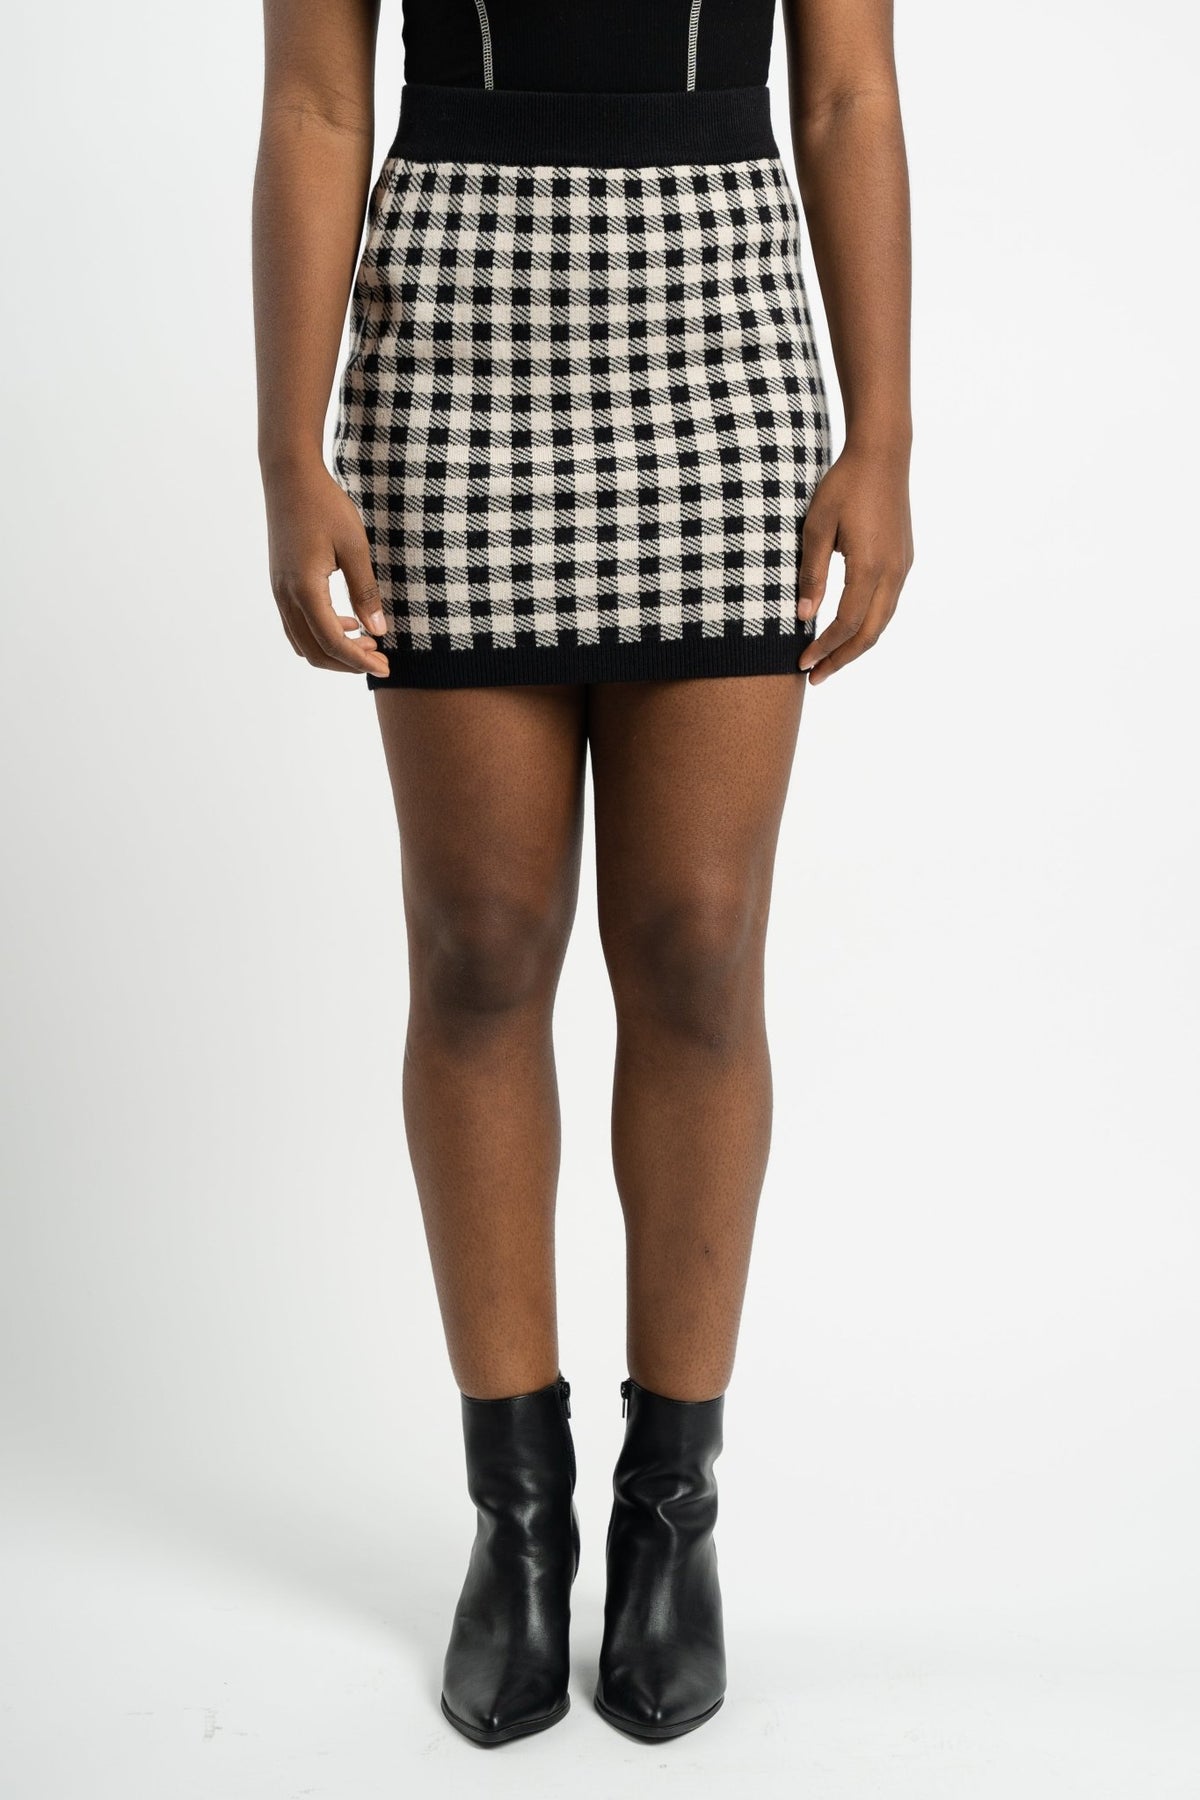 Checkered skirt black | Lush Fashion Lounge: boutique fashion skirts, affordable boutique skirts, cute affordable skirts